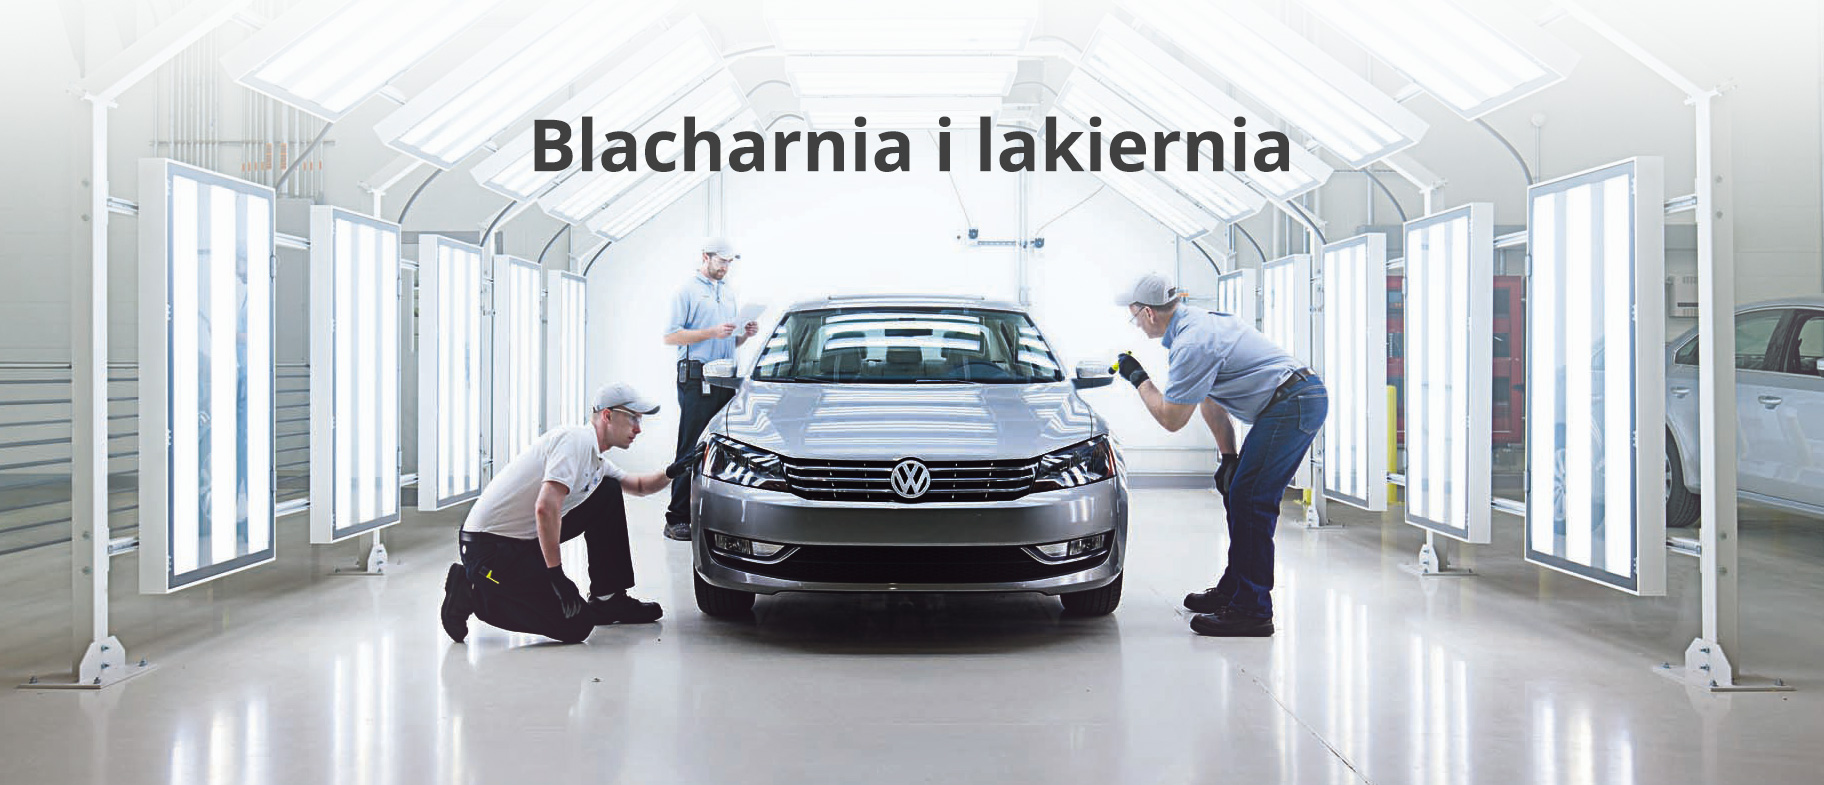 Blacharnia i Lakiernia Volkswagen we Wrocławiu